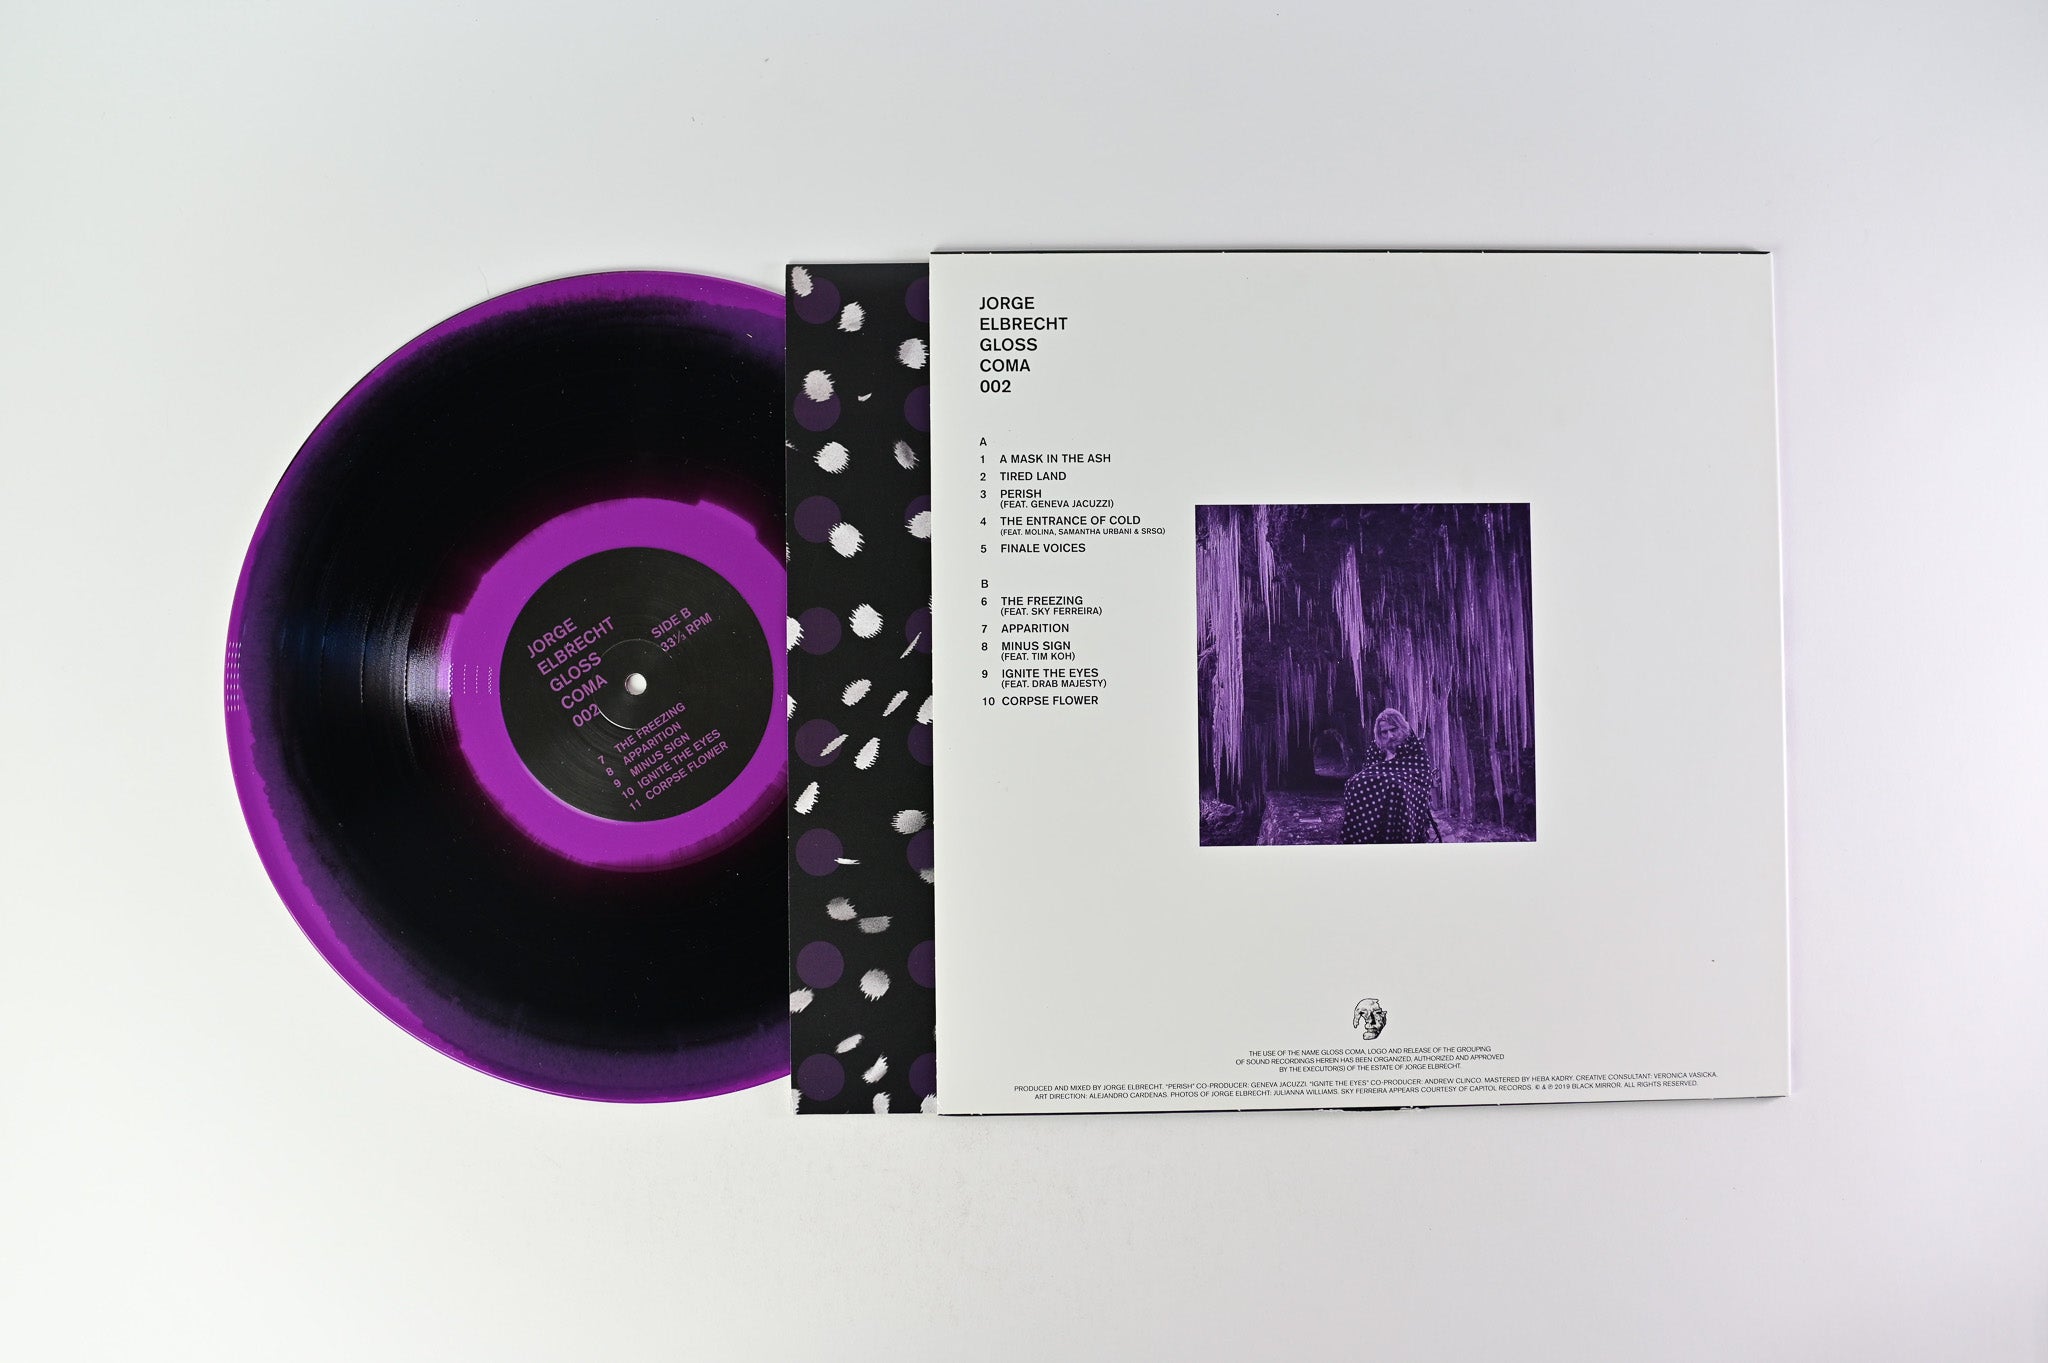 Jorge Elbrecht - Gloss Coma - 002 Ltd Permafrost Black & Purple Vinyl